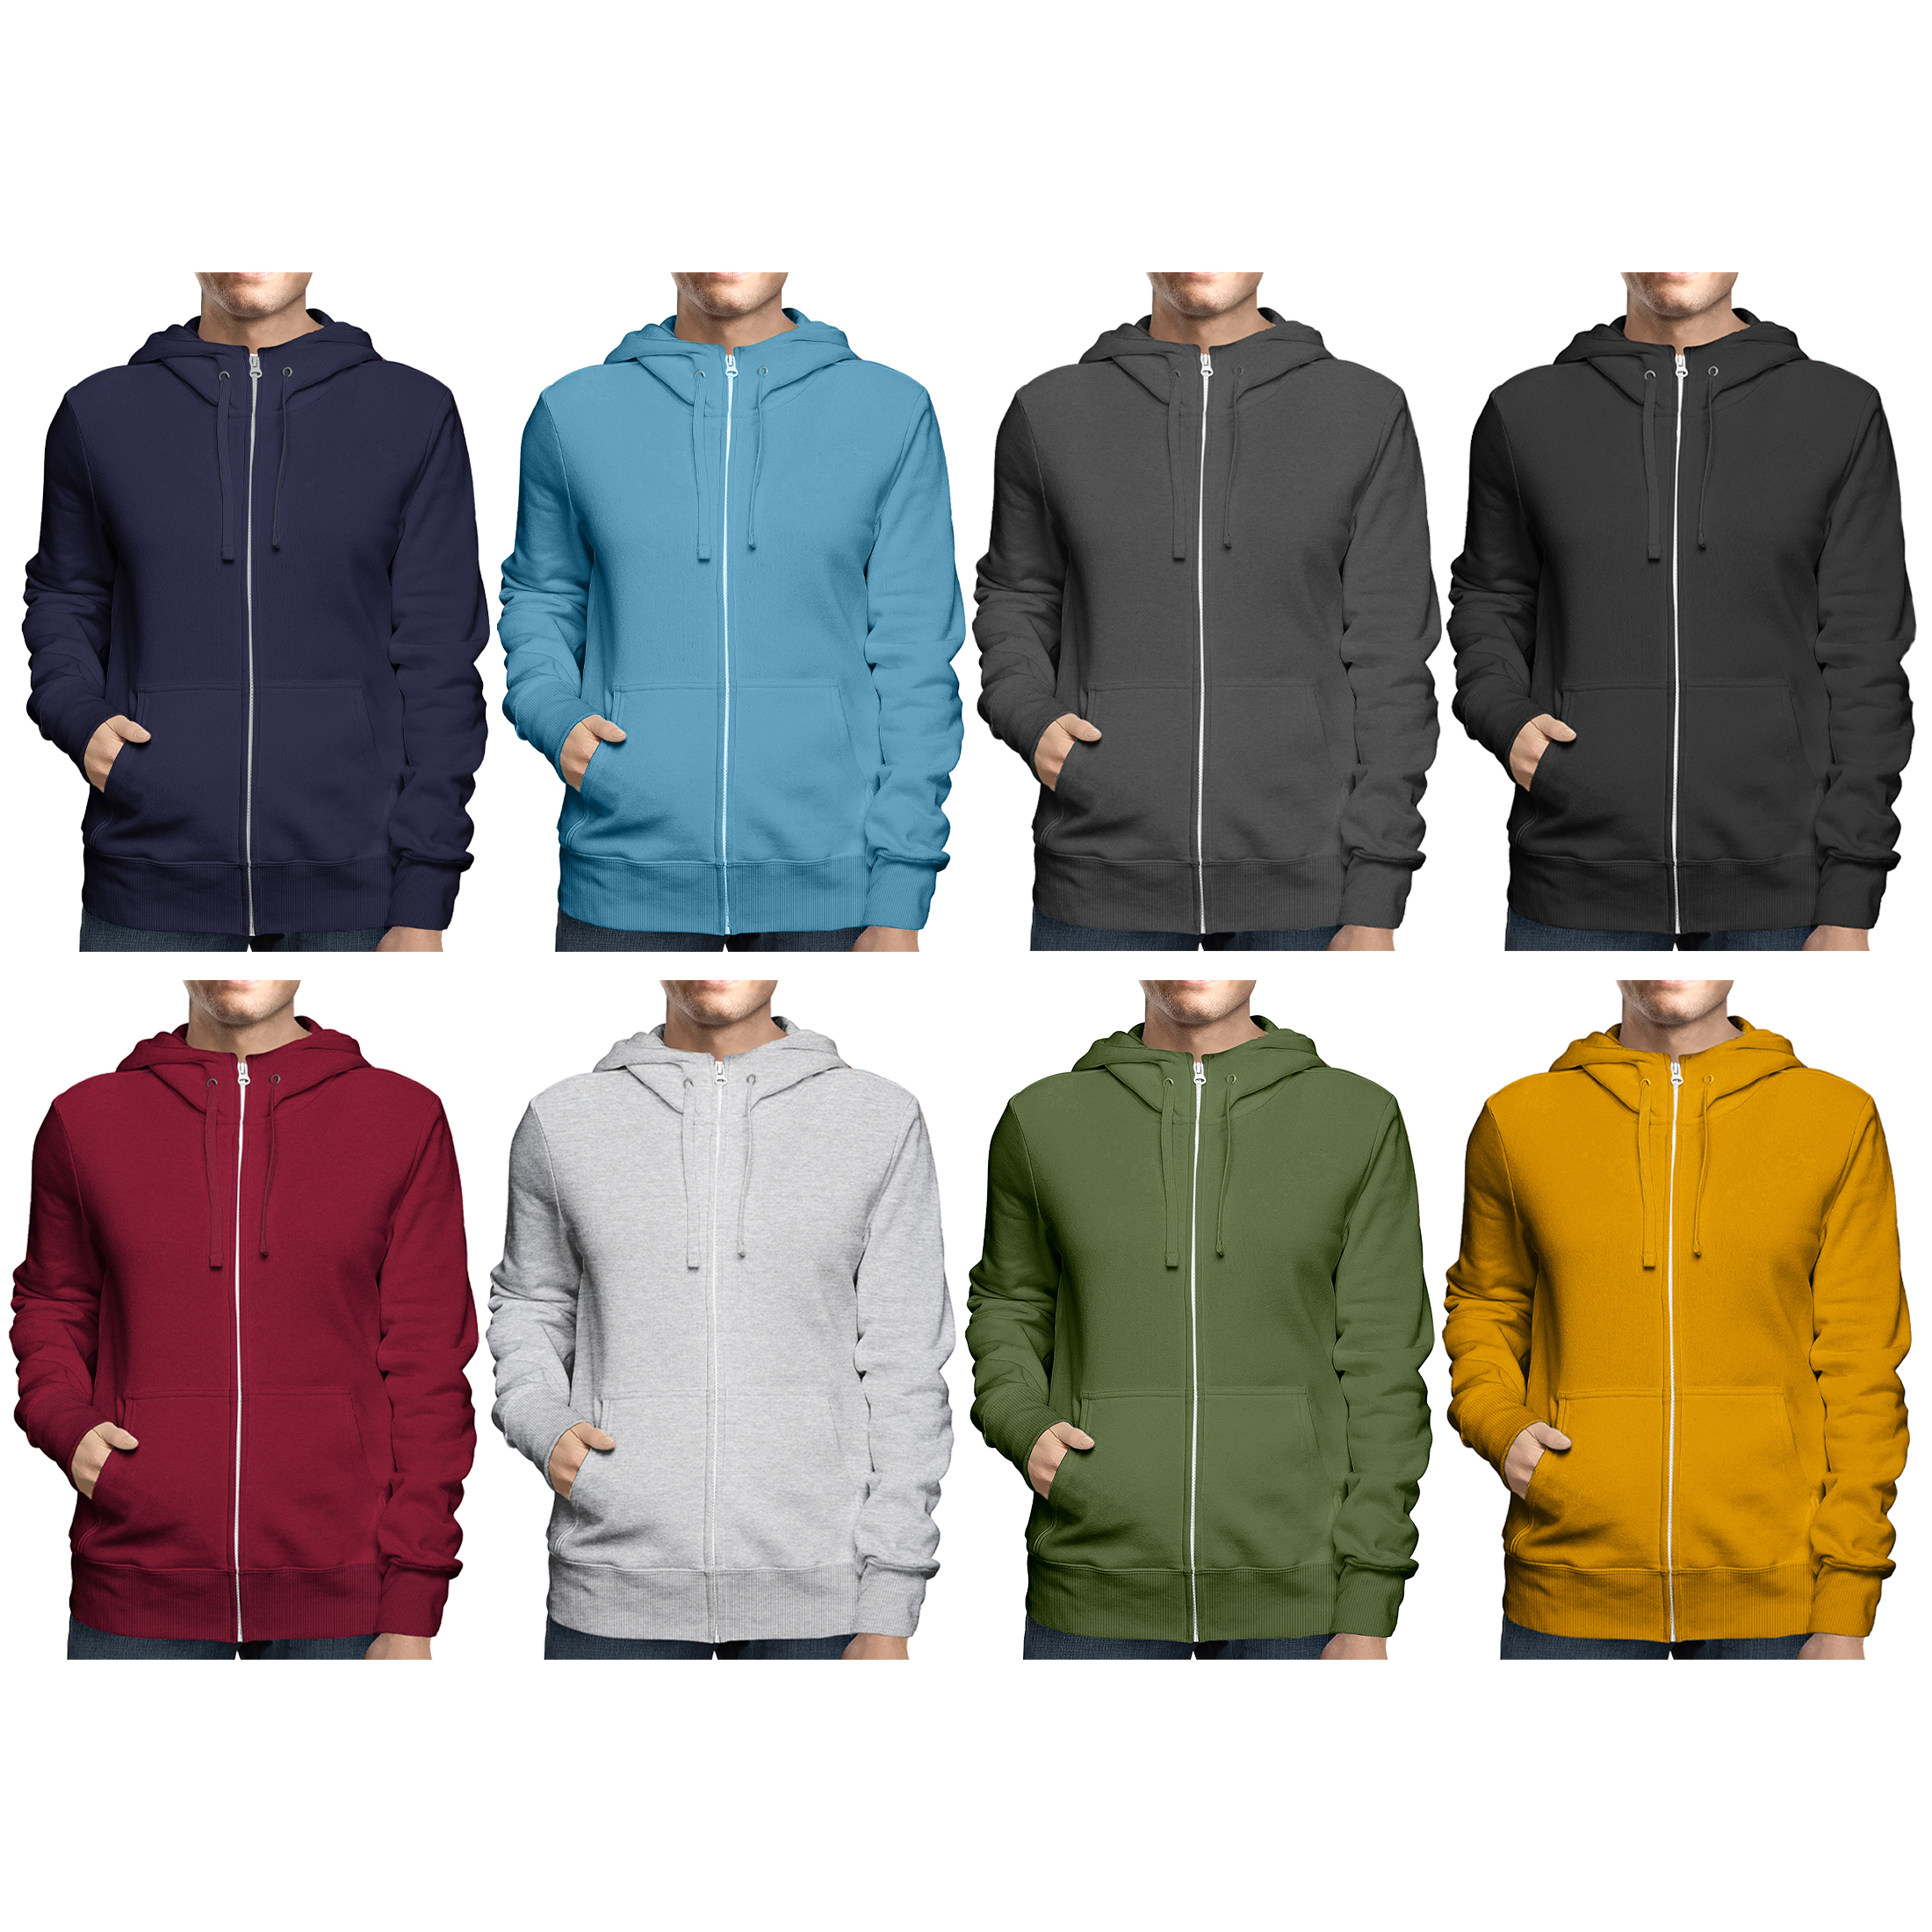 2-Pack: Men's Full Zip Up Fleece-Lined Hoodie Sweatshirt (Big & Tall Size Available) - Gray & Olive, Medium